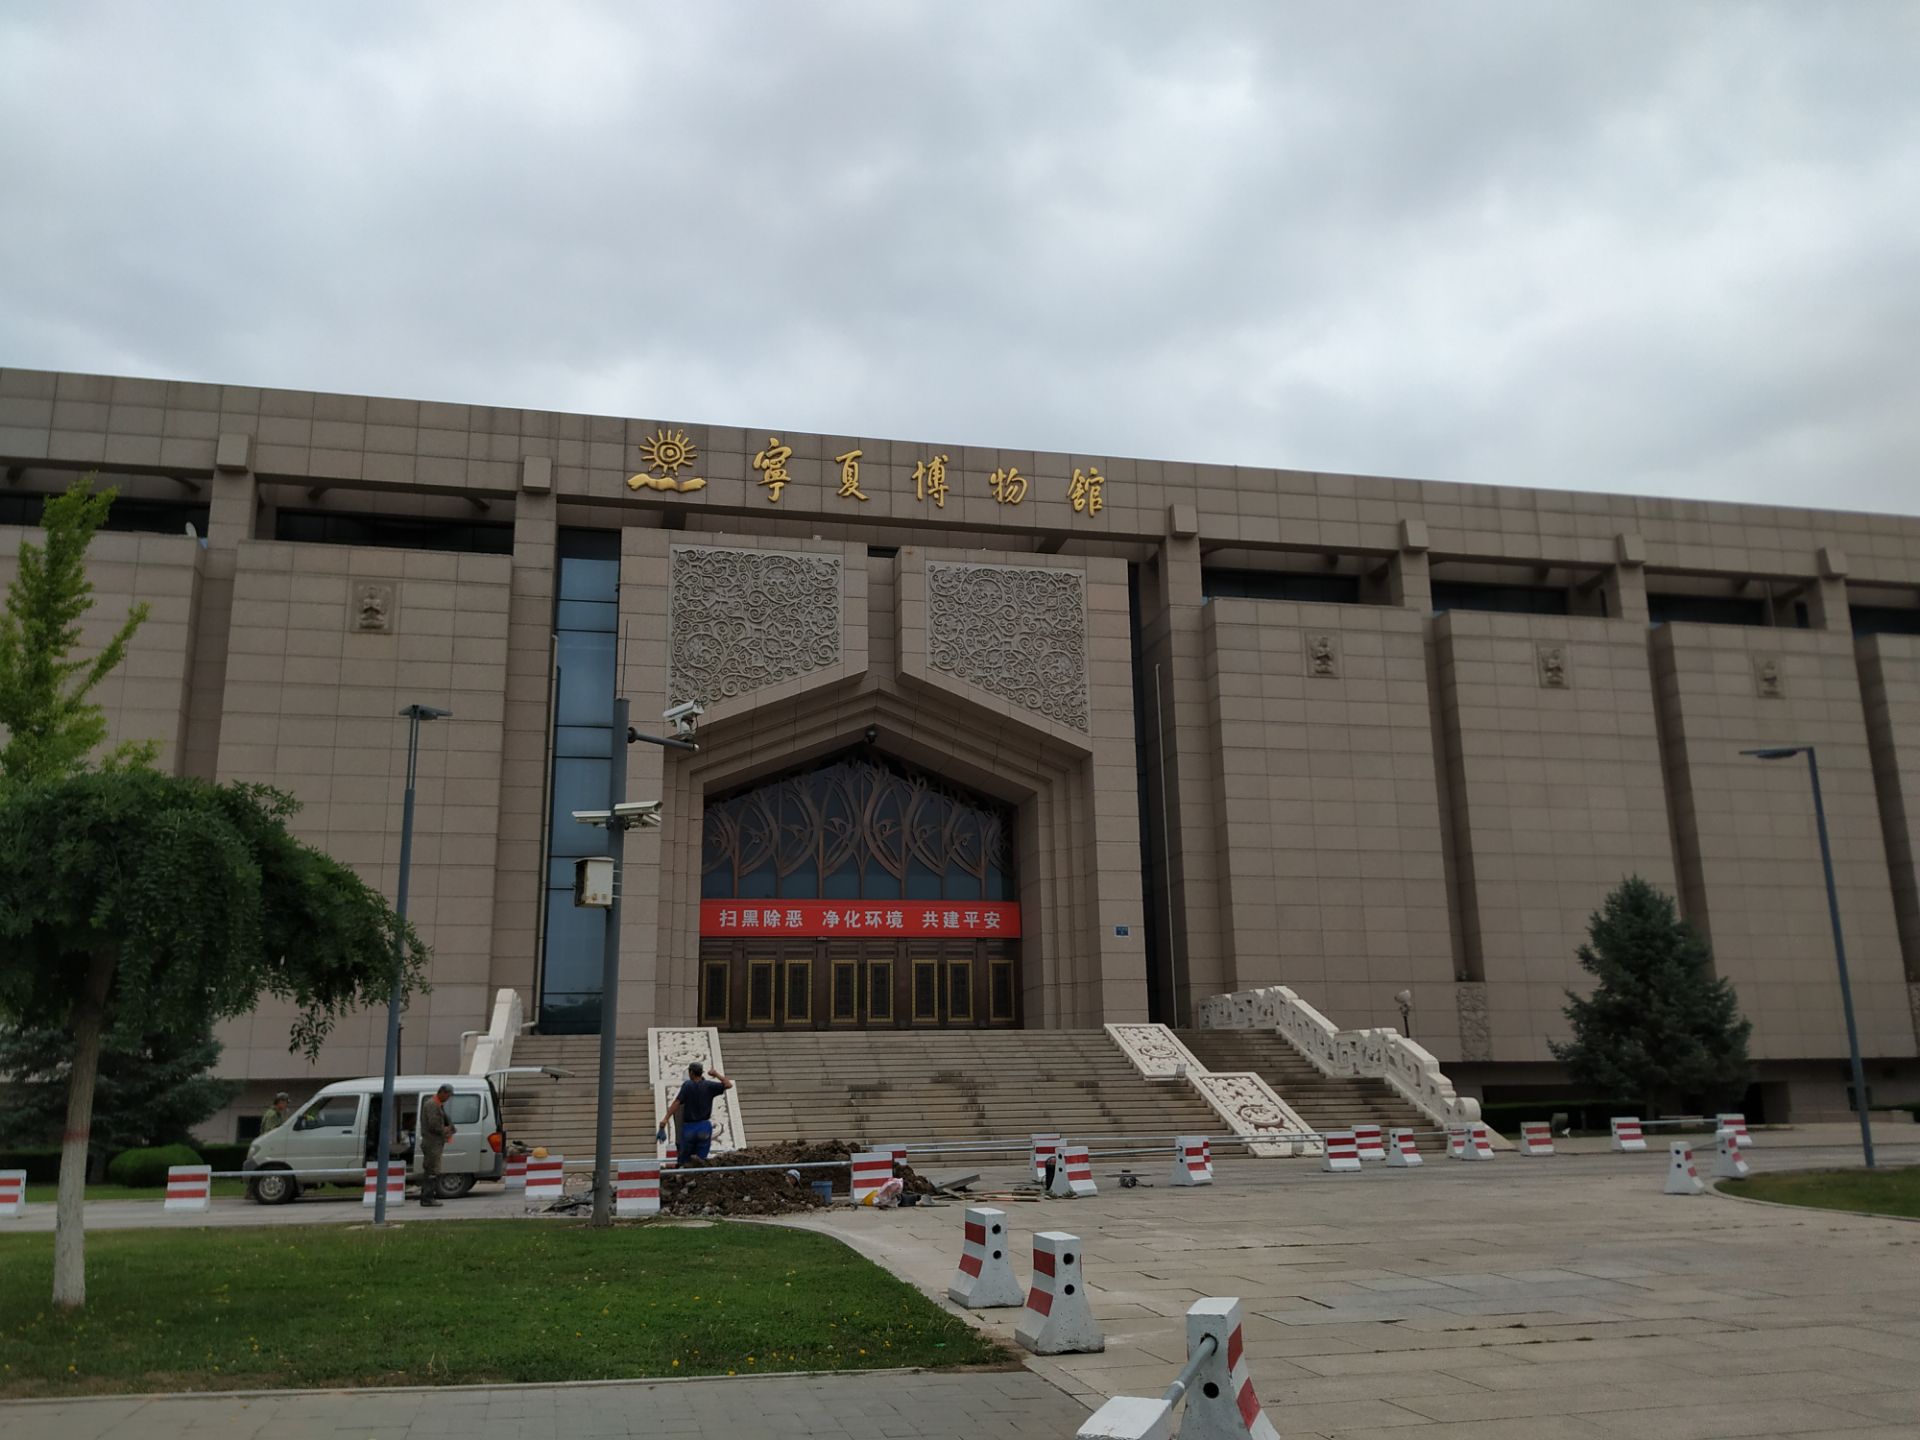 Gallery of Yinchuan Museum of Contemporary Art (MOCA) / waa - 2